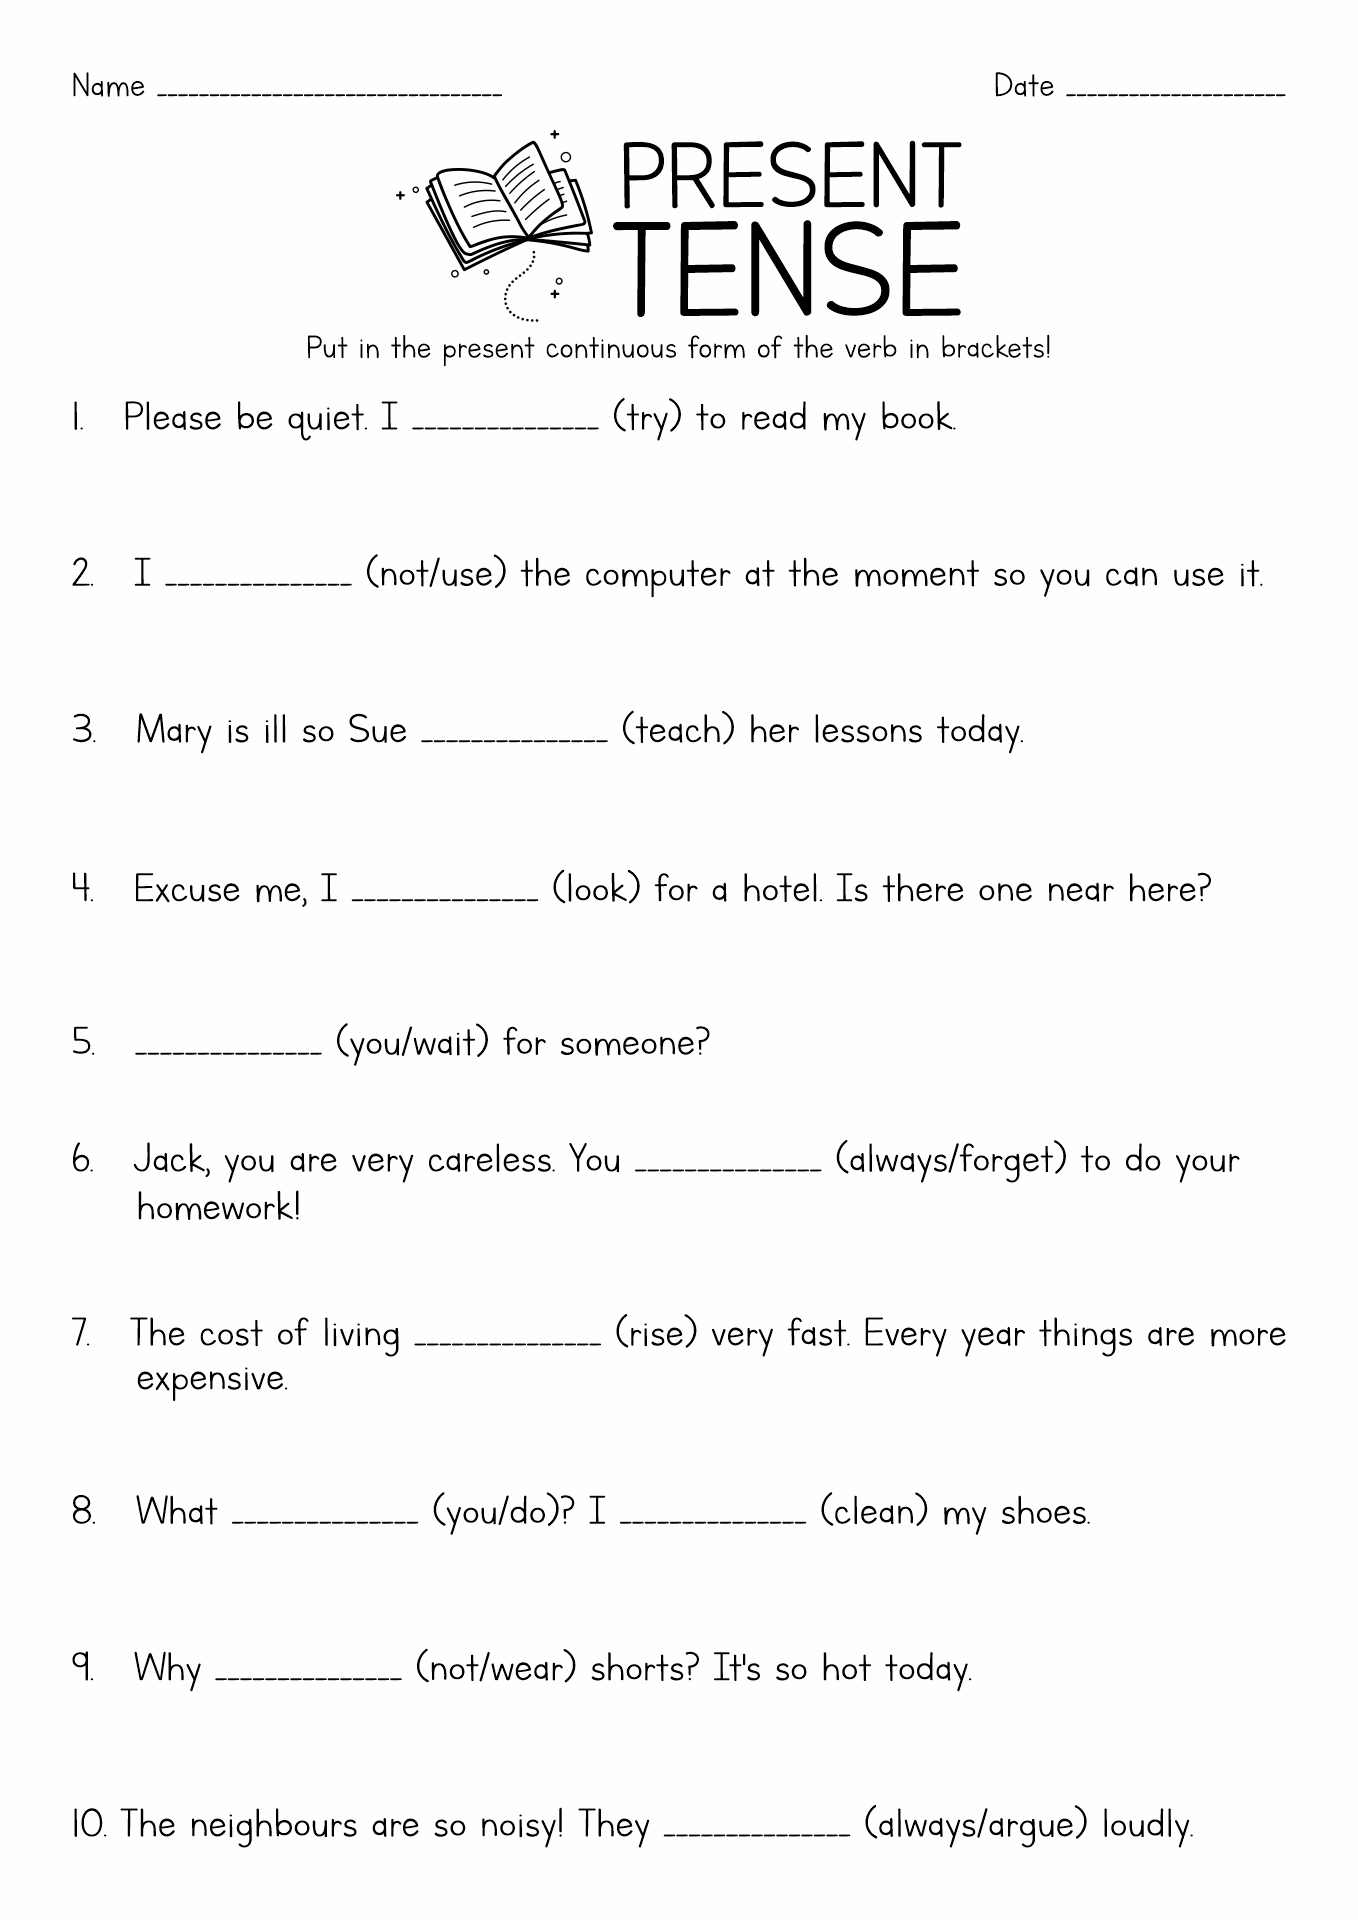 Present Tense Verbs Worksheets Image